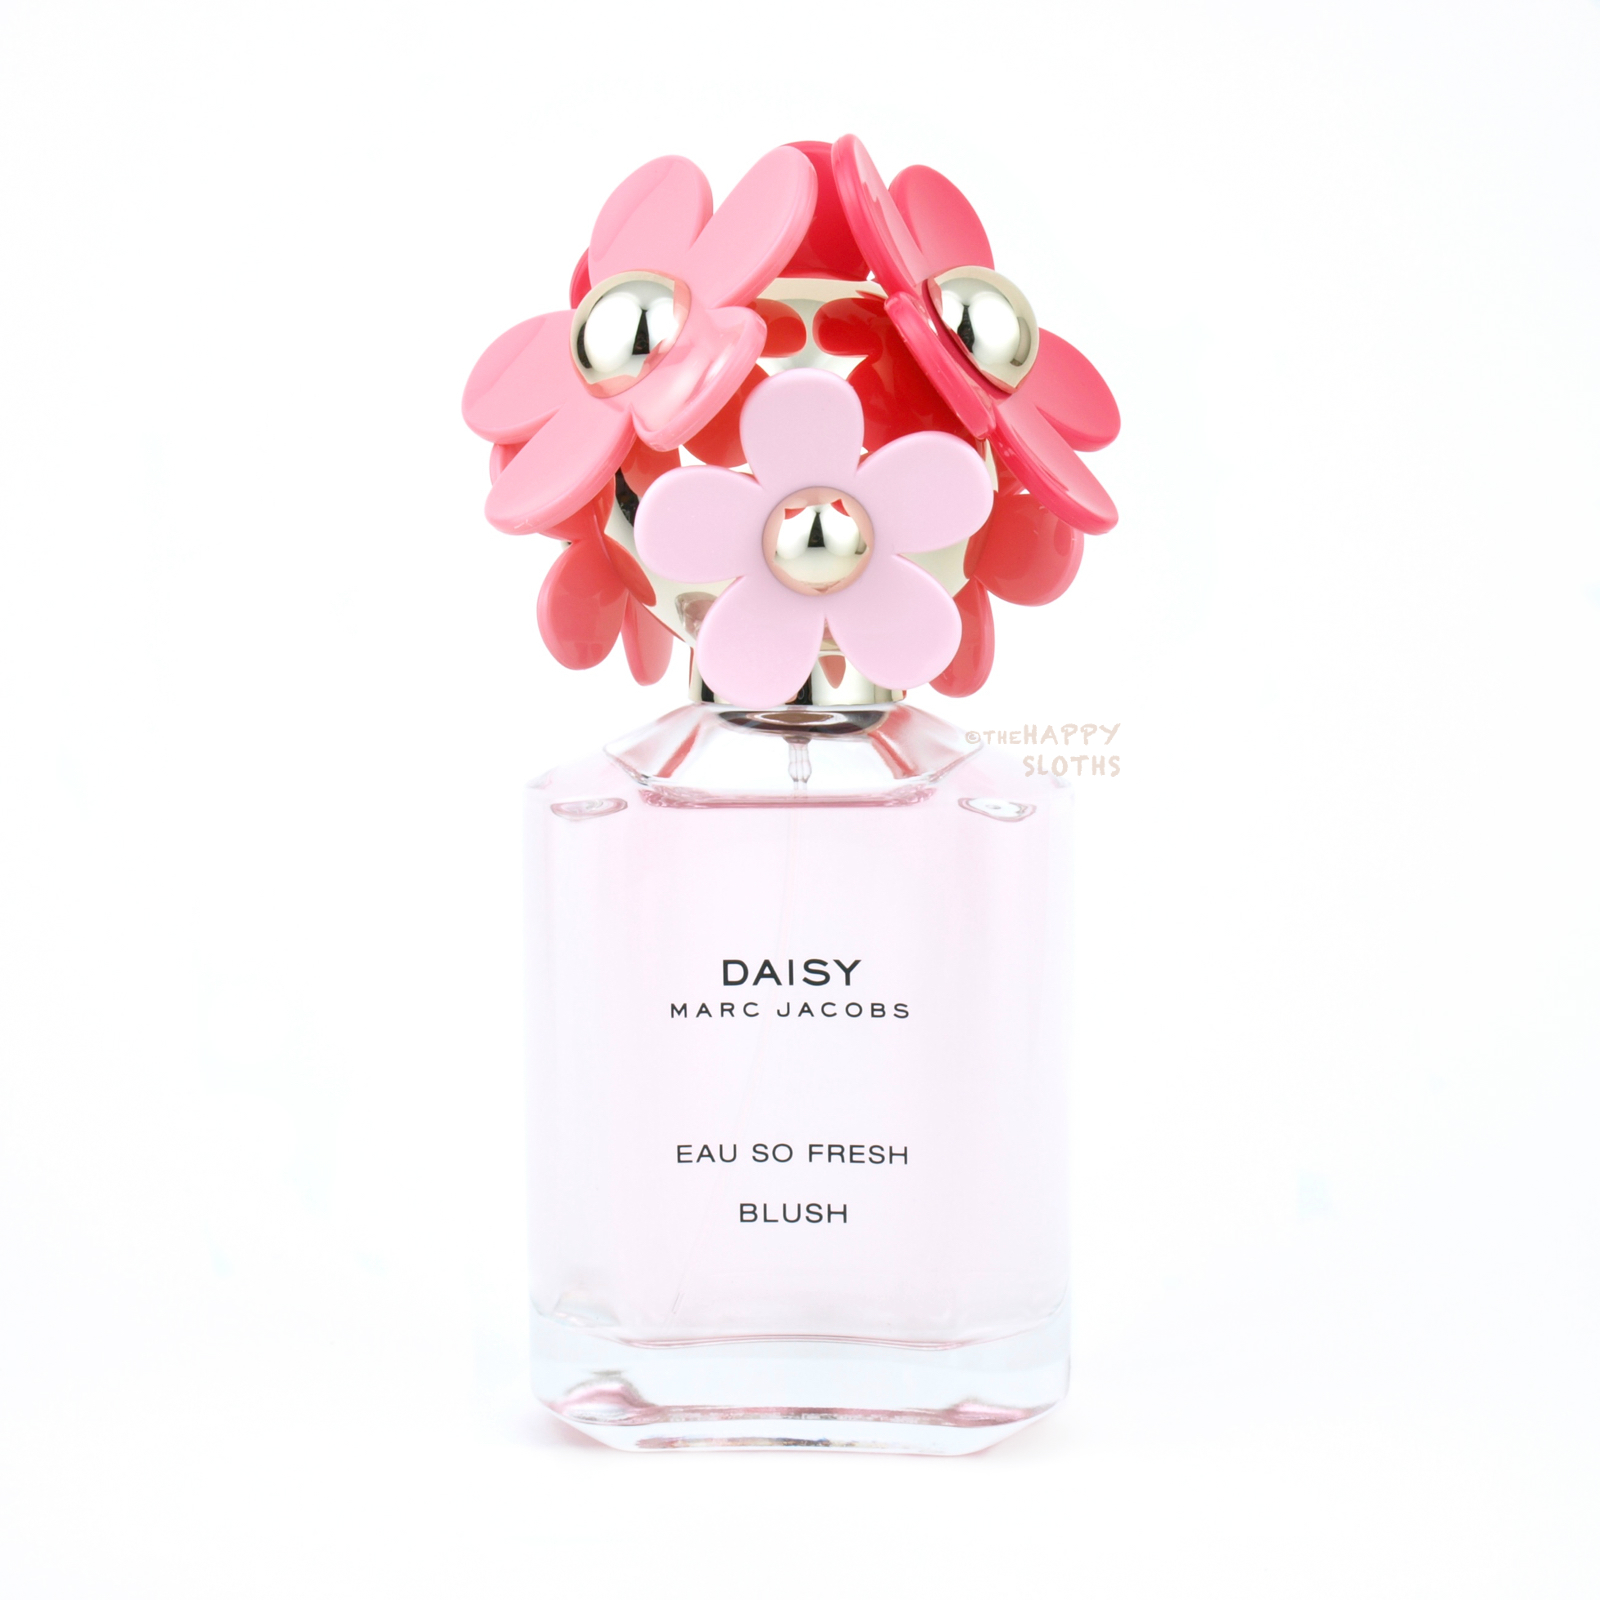 Marc Jacobs Daisy Blush & Daisy Eau So Fresh Blush: Review | The ...